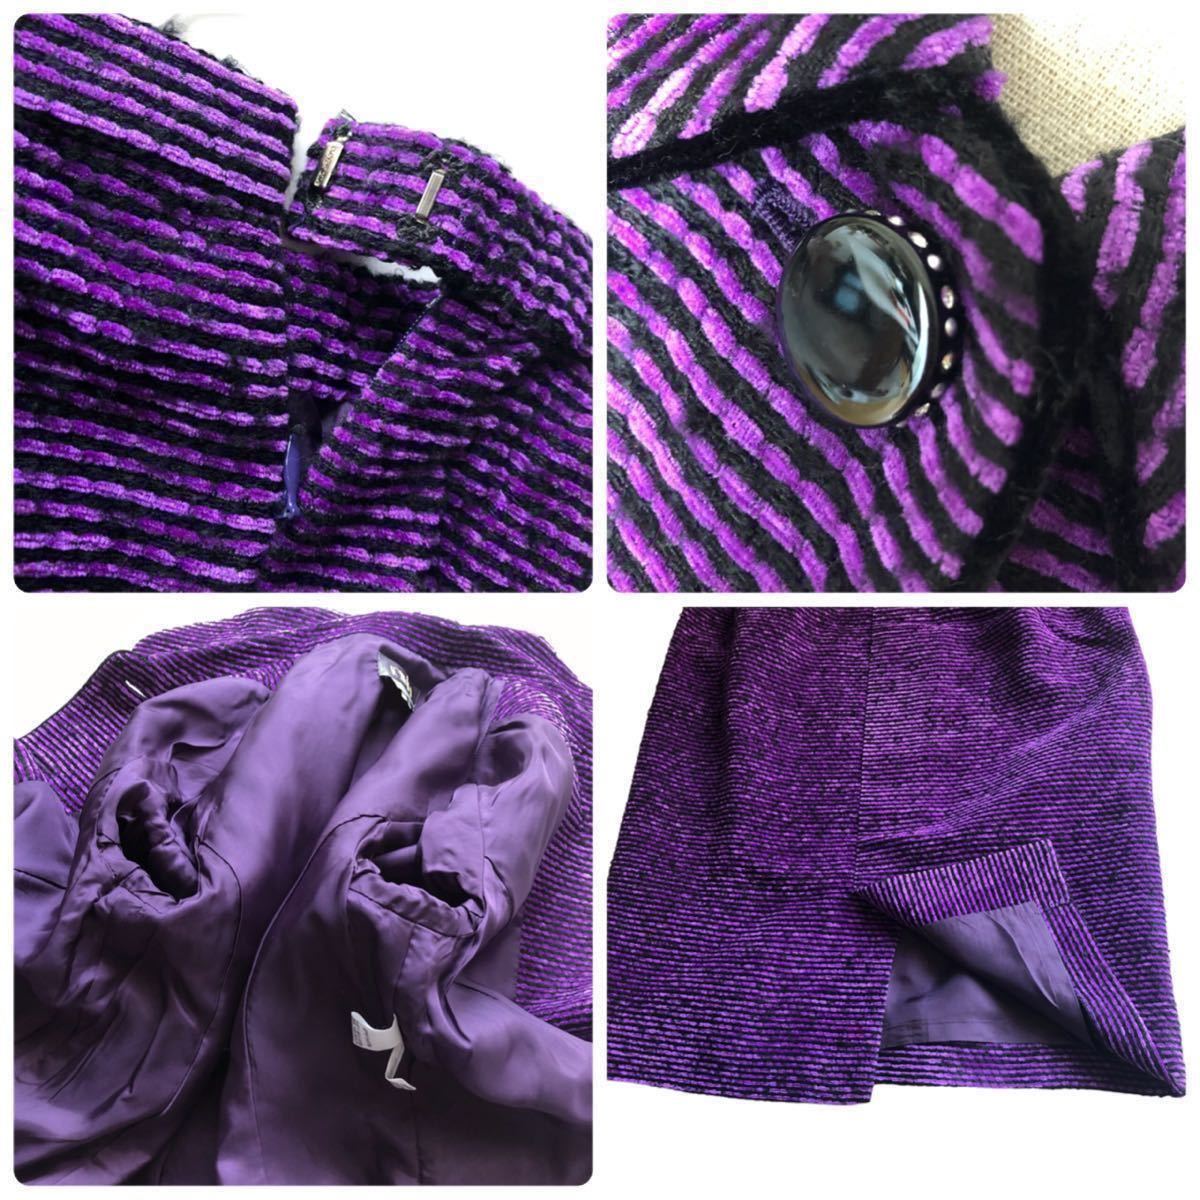  high class remalonrema ronsui s made cloth setup suit jacket skirt formal large size 13 number LL XL purple Vintage purple black 